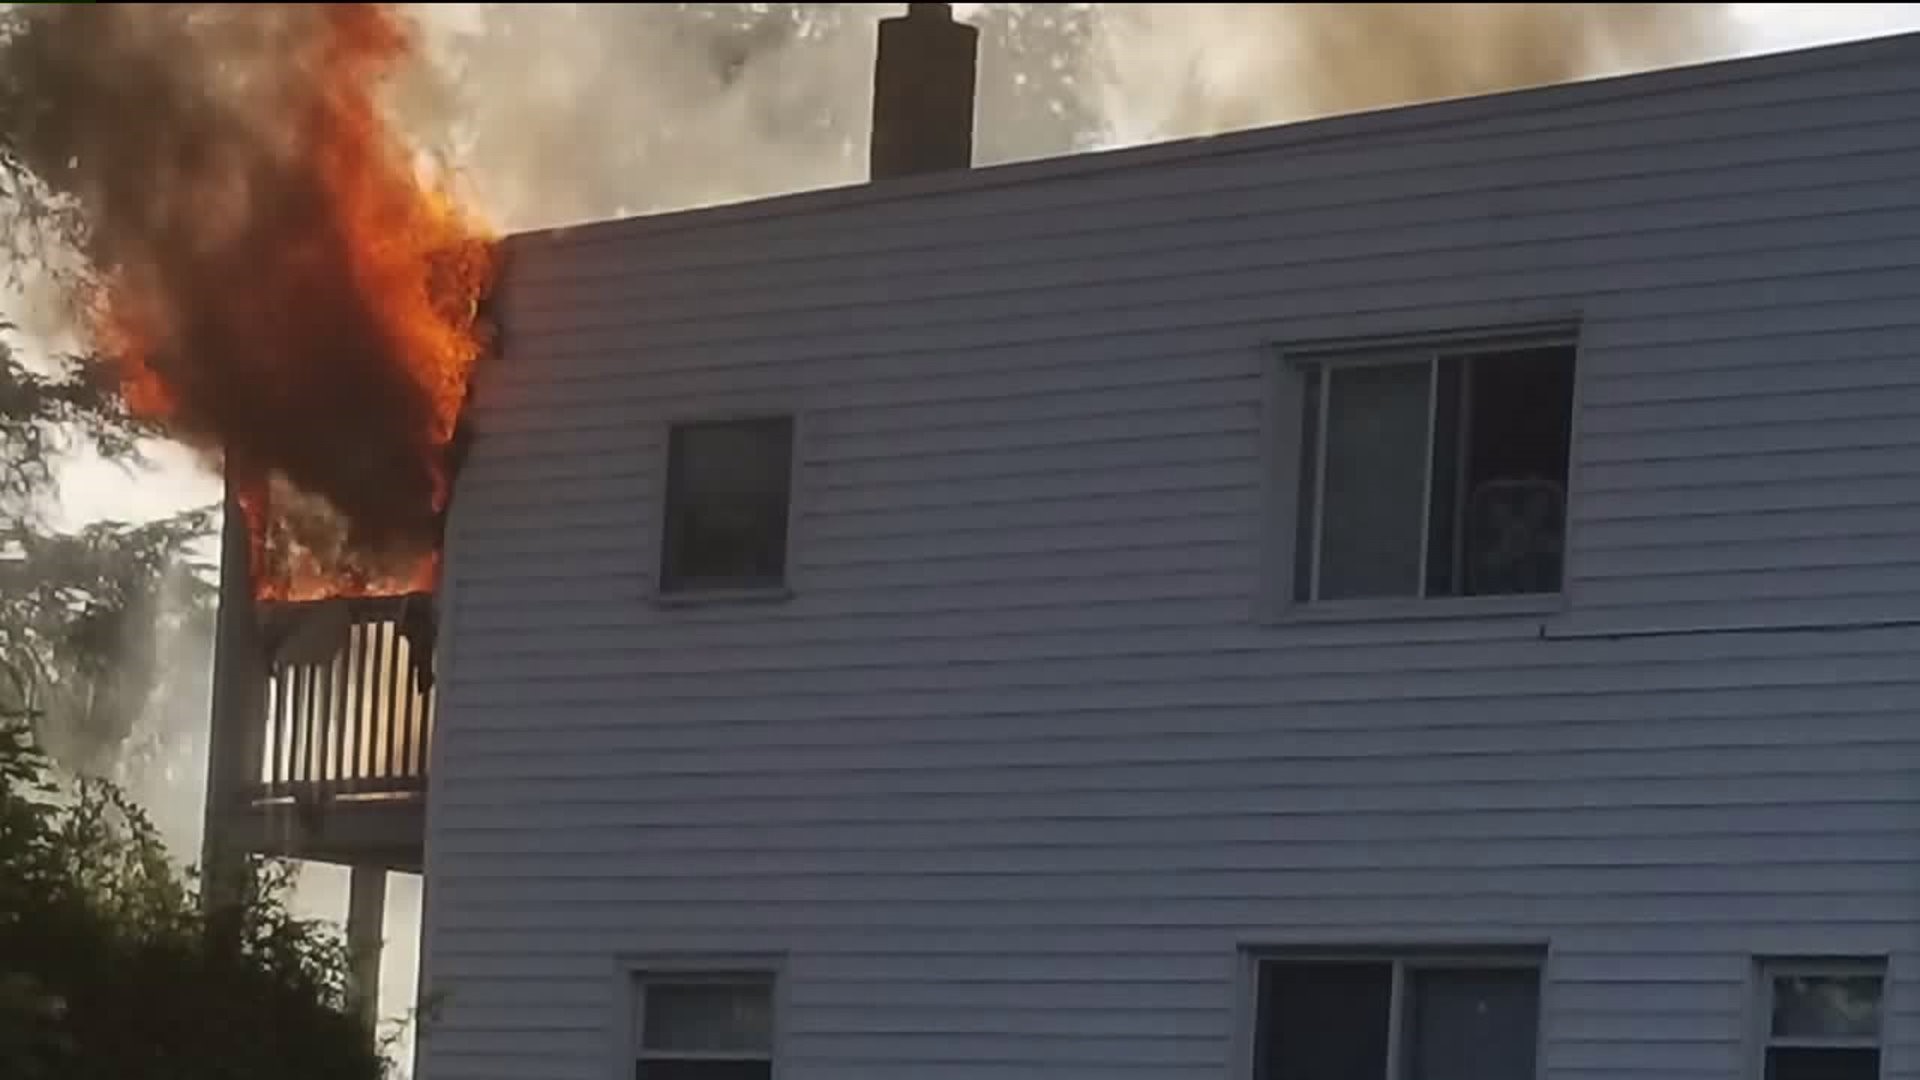 Utility Workers Warn Sleeping Tenants of Fire in Scranton Apartments